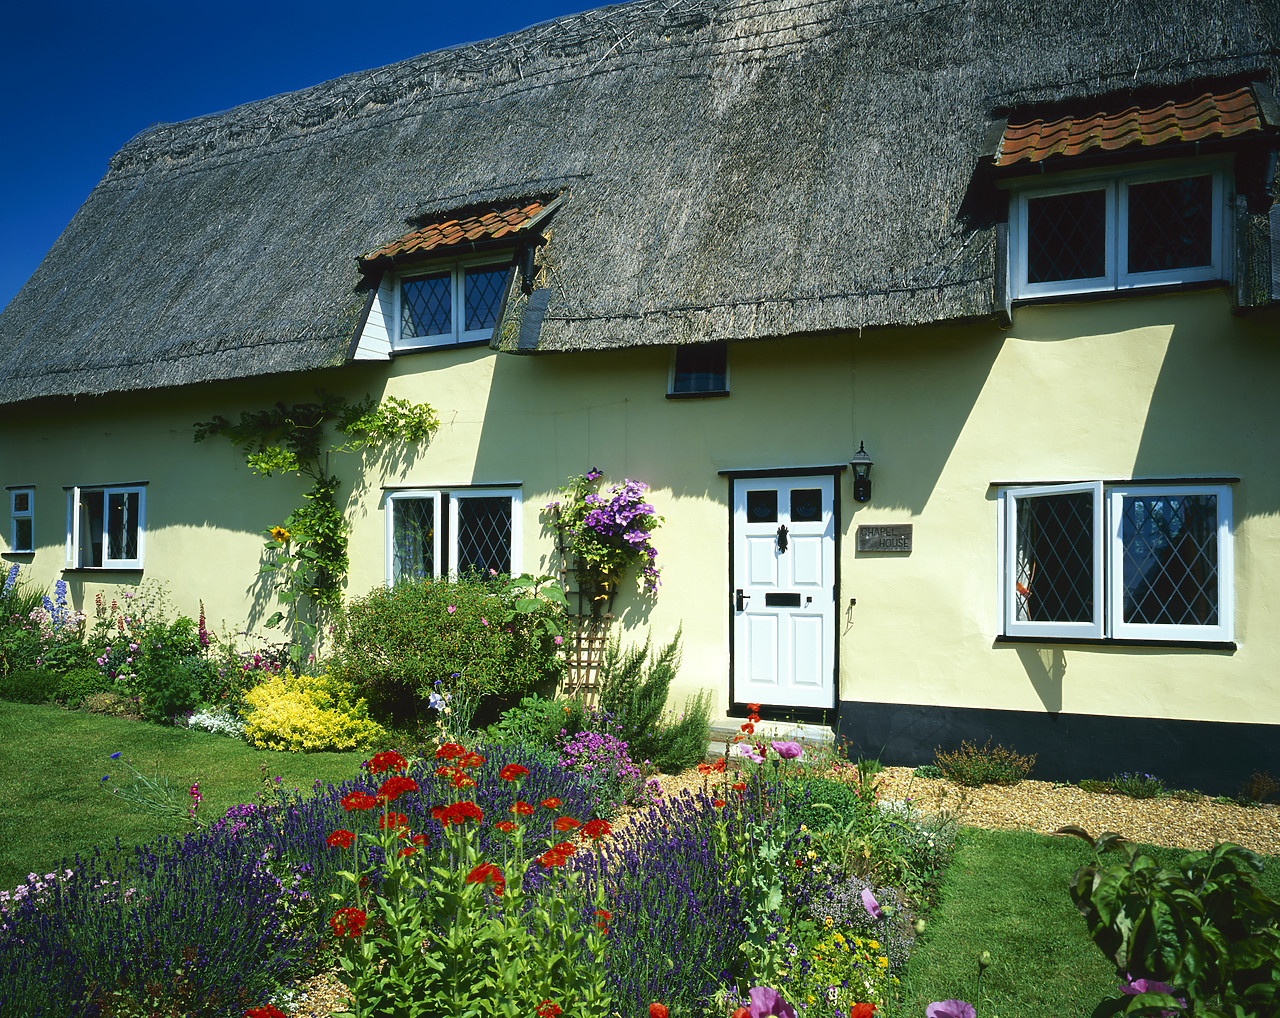 #030134-4 - Thatched Cottage & Garden, Redgrave, Suffolk, England